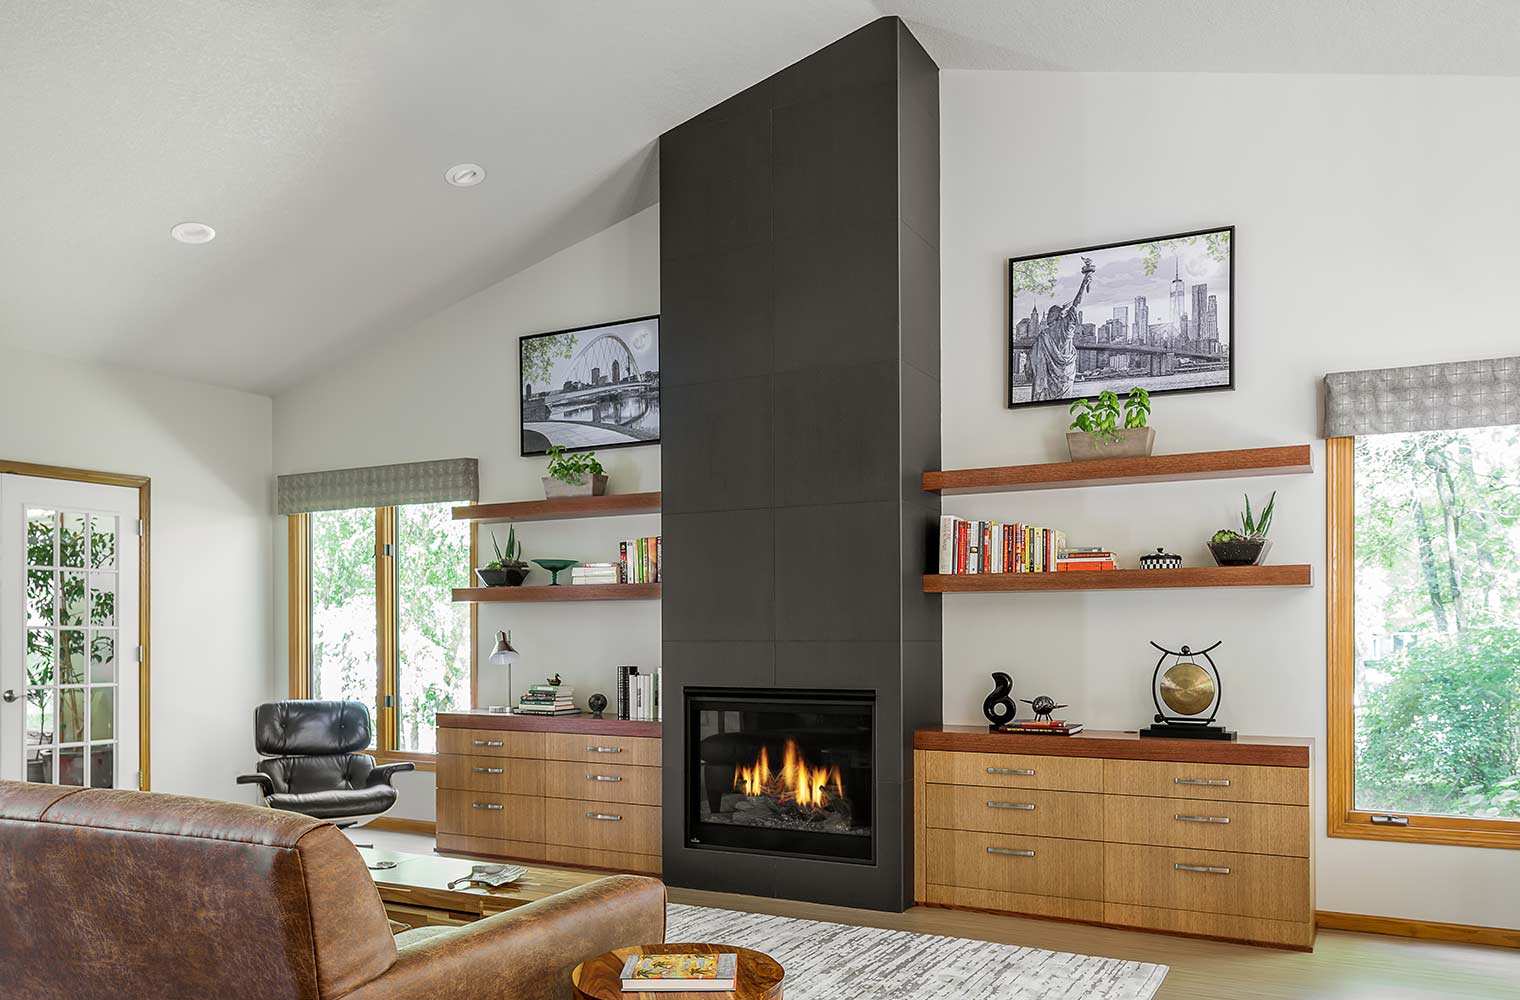 Fireplace Design Ideas Hot Ways To, Shelves Around Fireplace Design